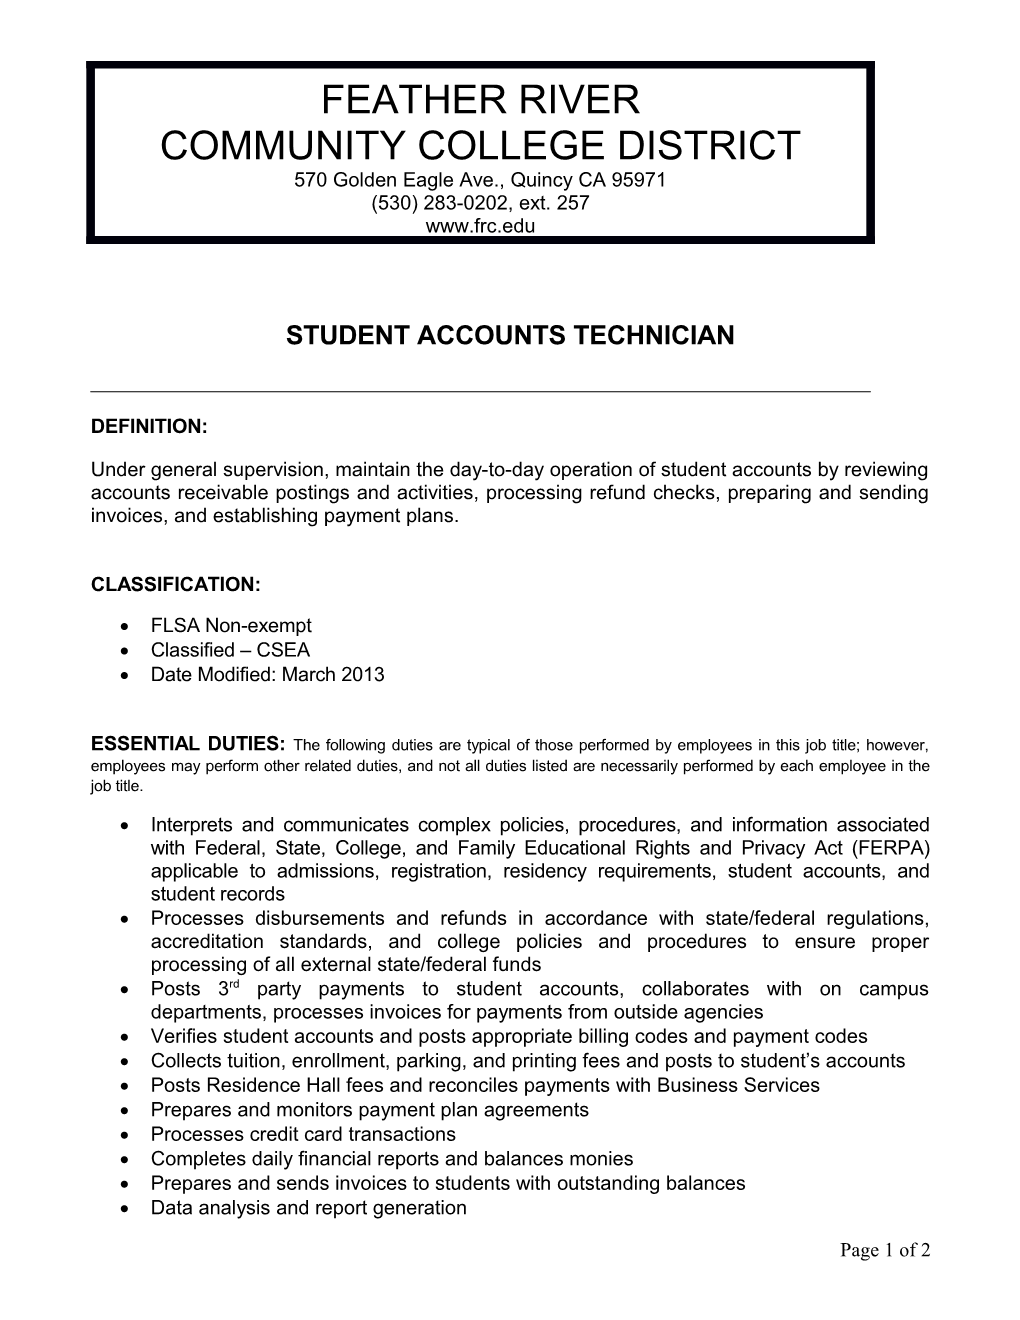 Student Accounts Technician